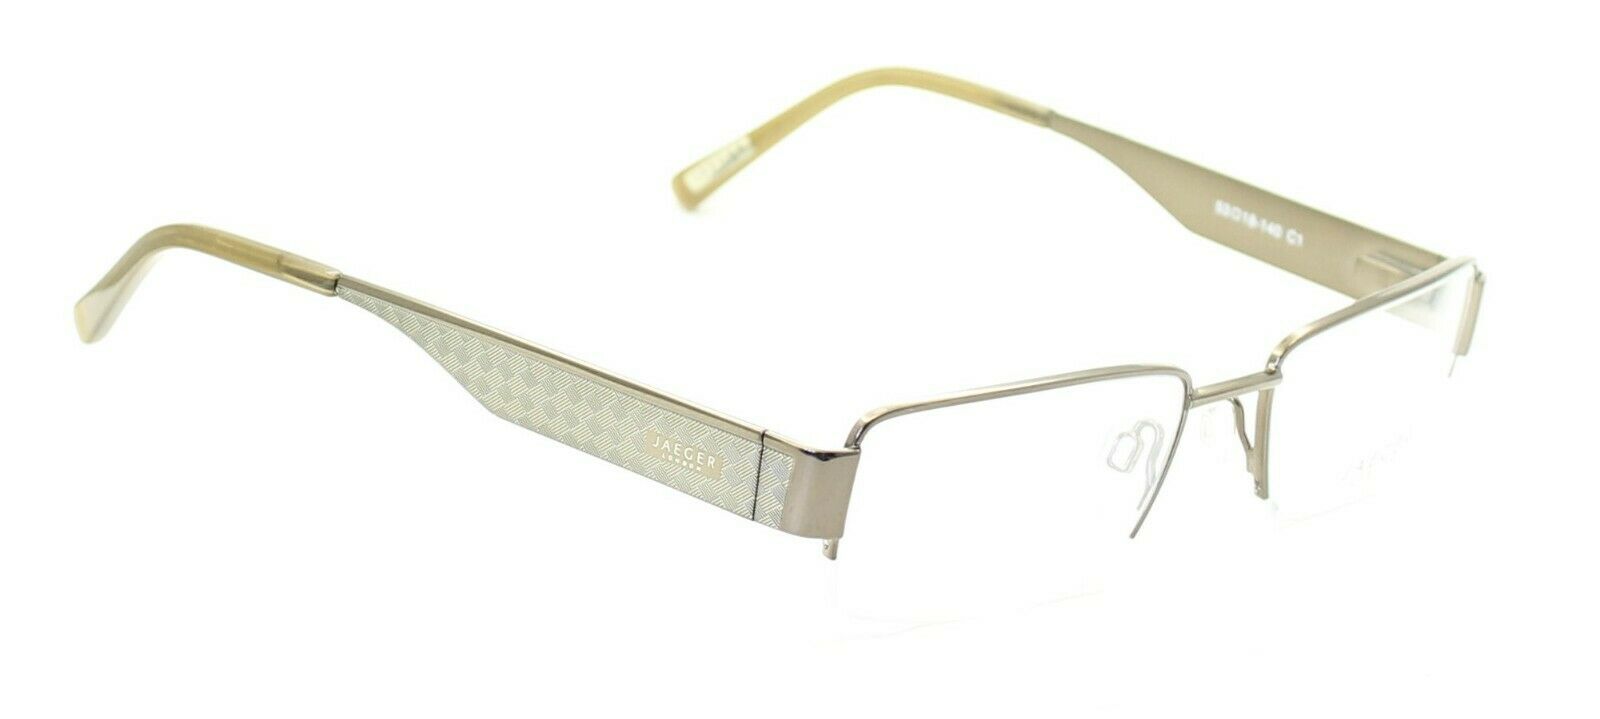 JAEGER LONDON 16 C1 53mm Eyewear FRAMES RX Optical Glasses Eyeglasses - New